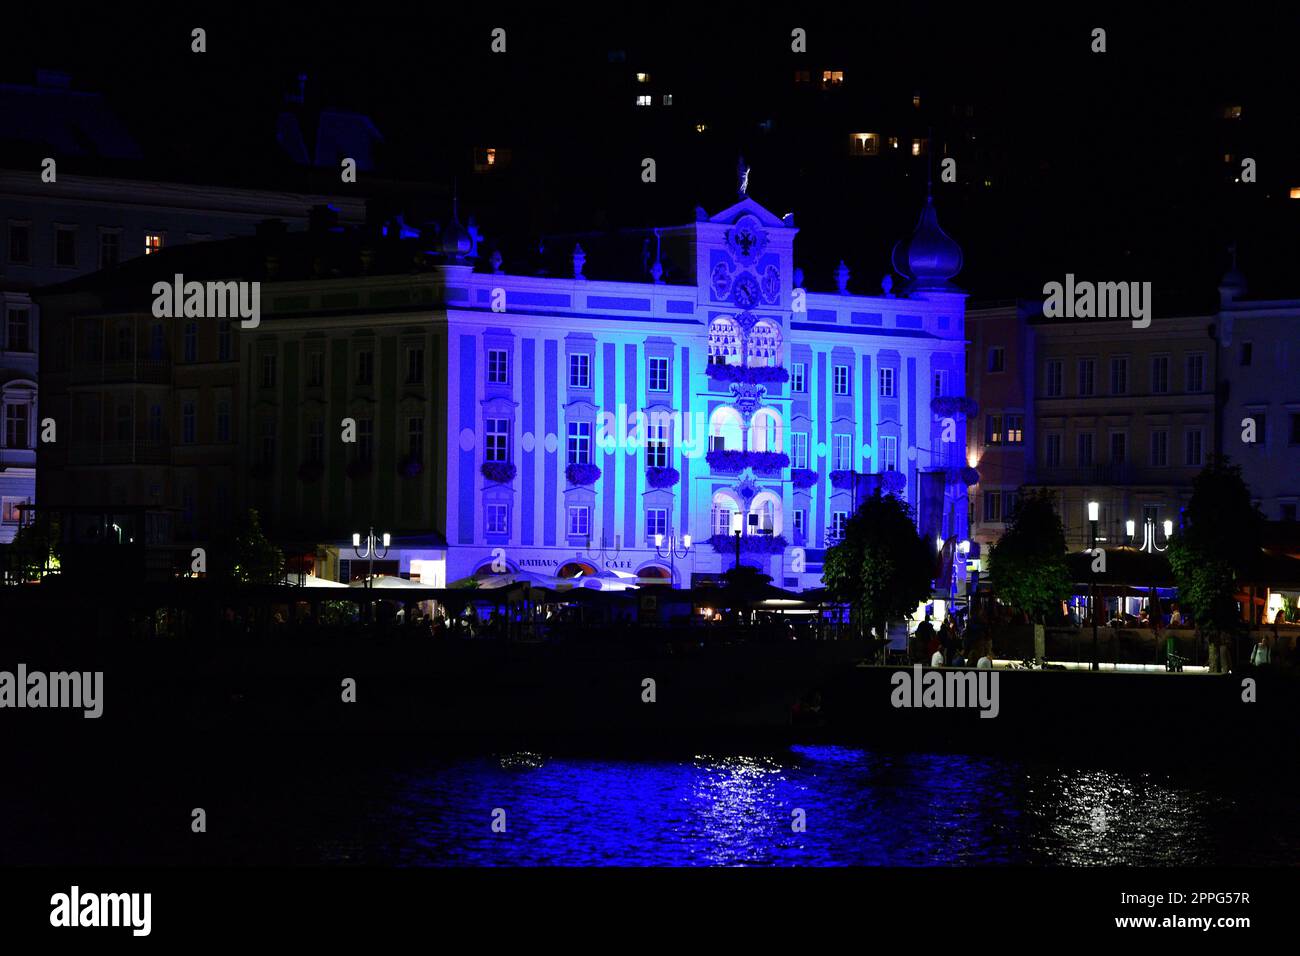 Blau beleuchtet immagini e fotografie stock ad alta risoluzione - Alamy